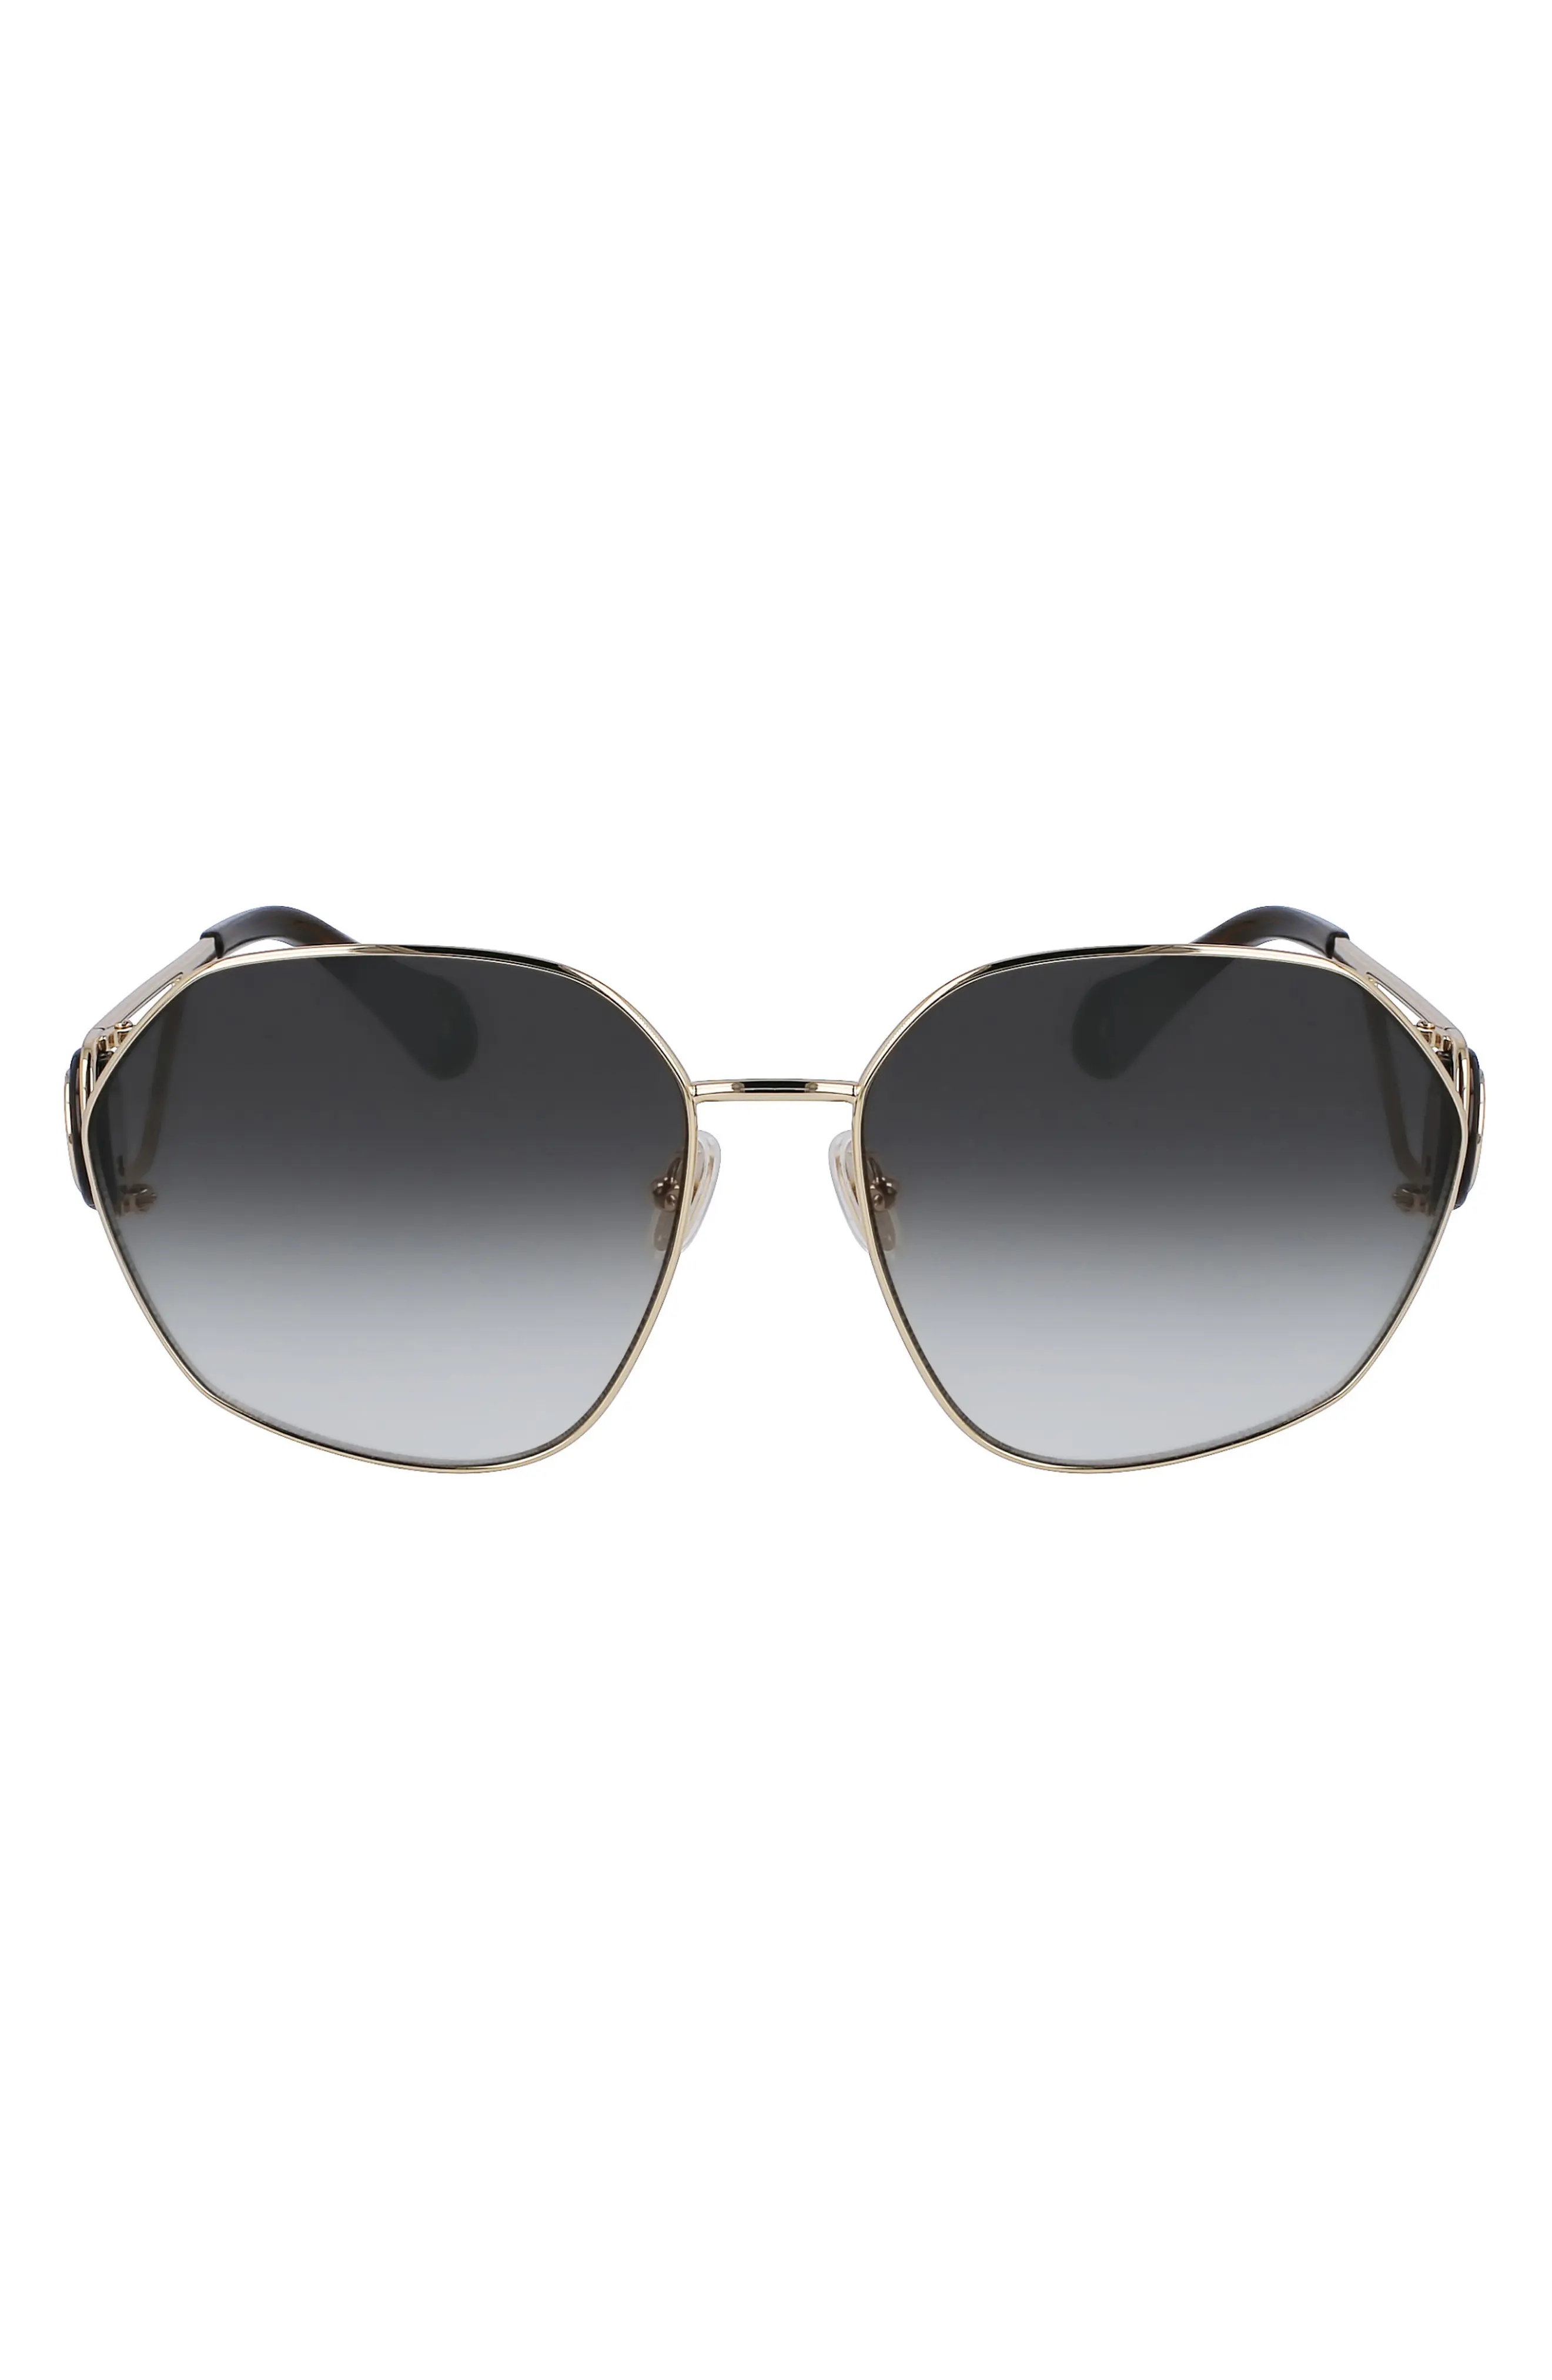 Mother & Child 62mm Oversize Rectangular Sunglasses in Gold/Gradient Khaki - 1